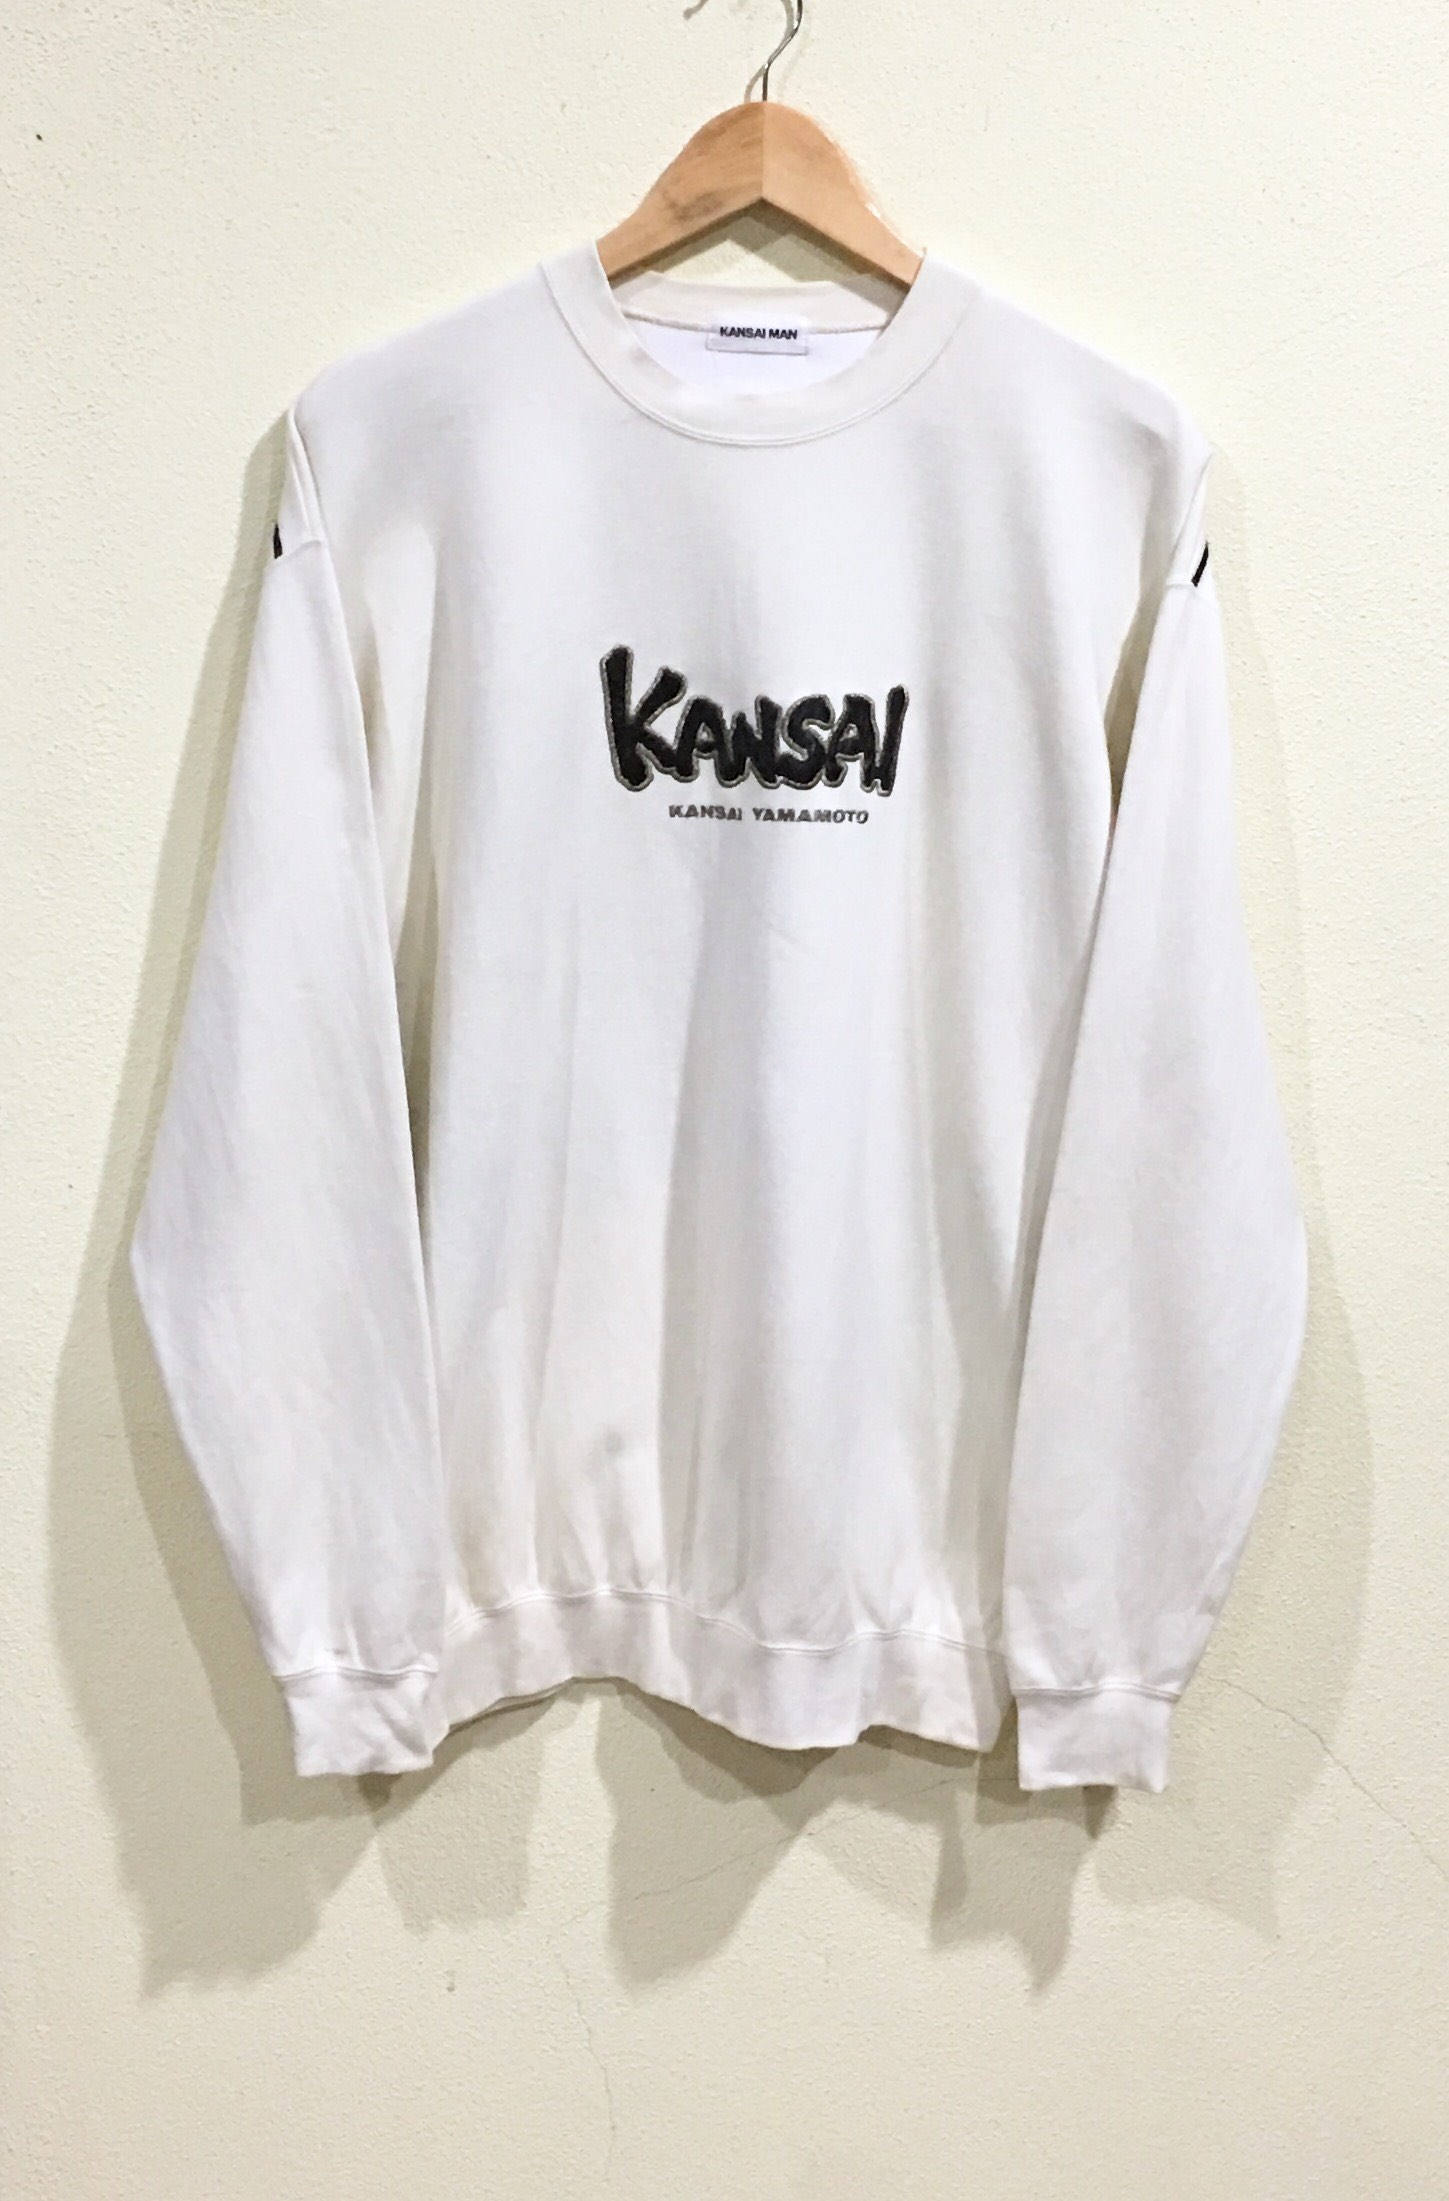 Zeldzame Vintage Kansai Man Kansai Yamamoto Crewneck Long Sleeve Sweatshirt geborduurd Spreuk Over Japanse modeontwerper Medium Kleding Herenkleding Hoodies & Sweatshirts Sweatshirts 